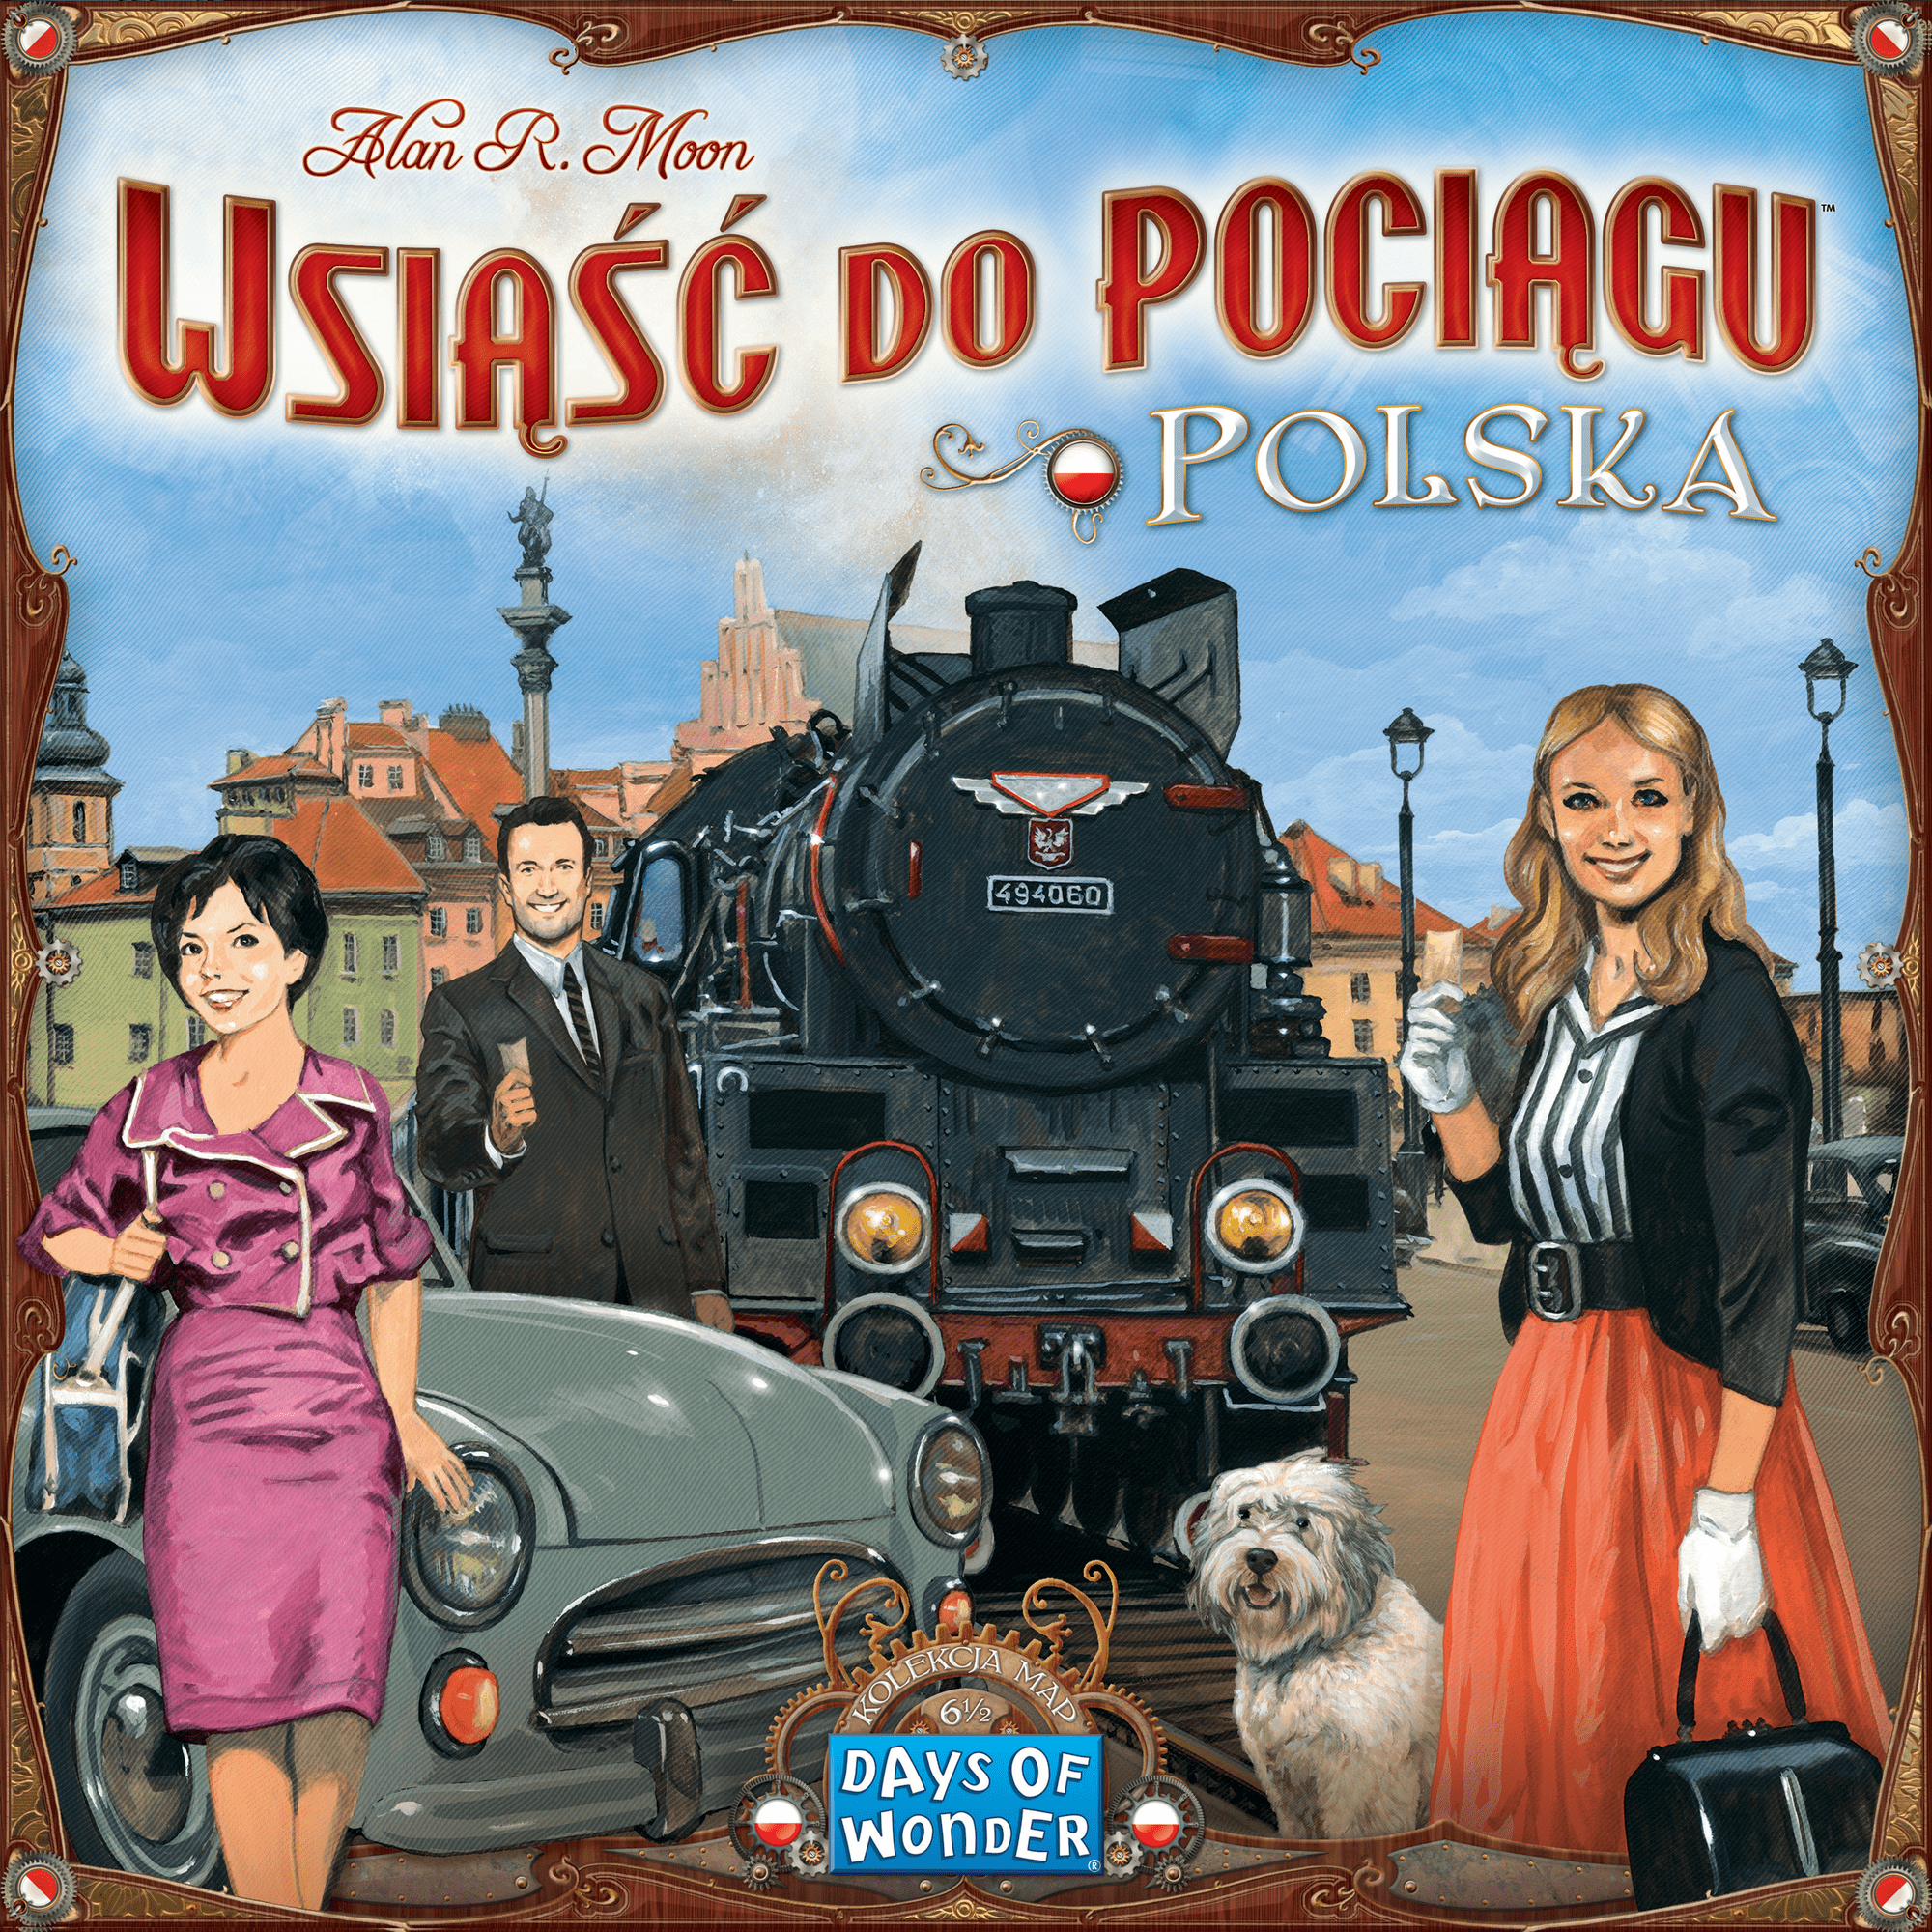 Wsiąść do Pociągu: Polska